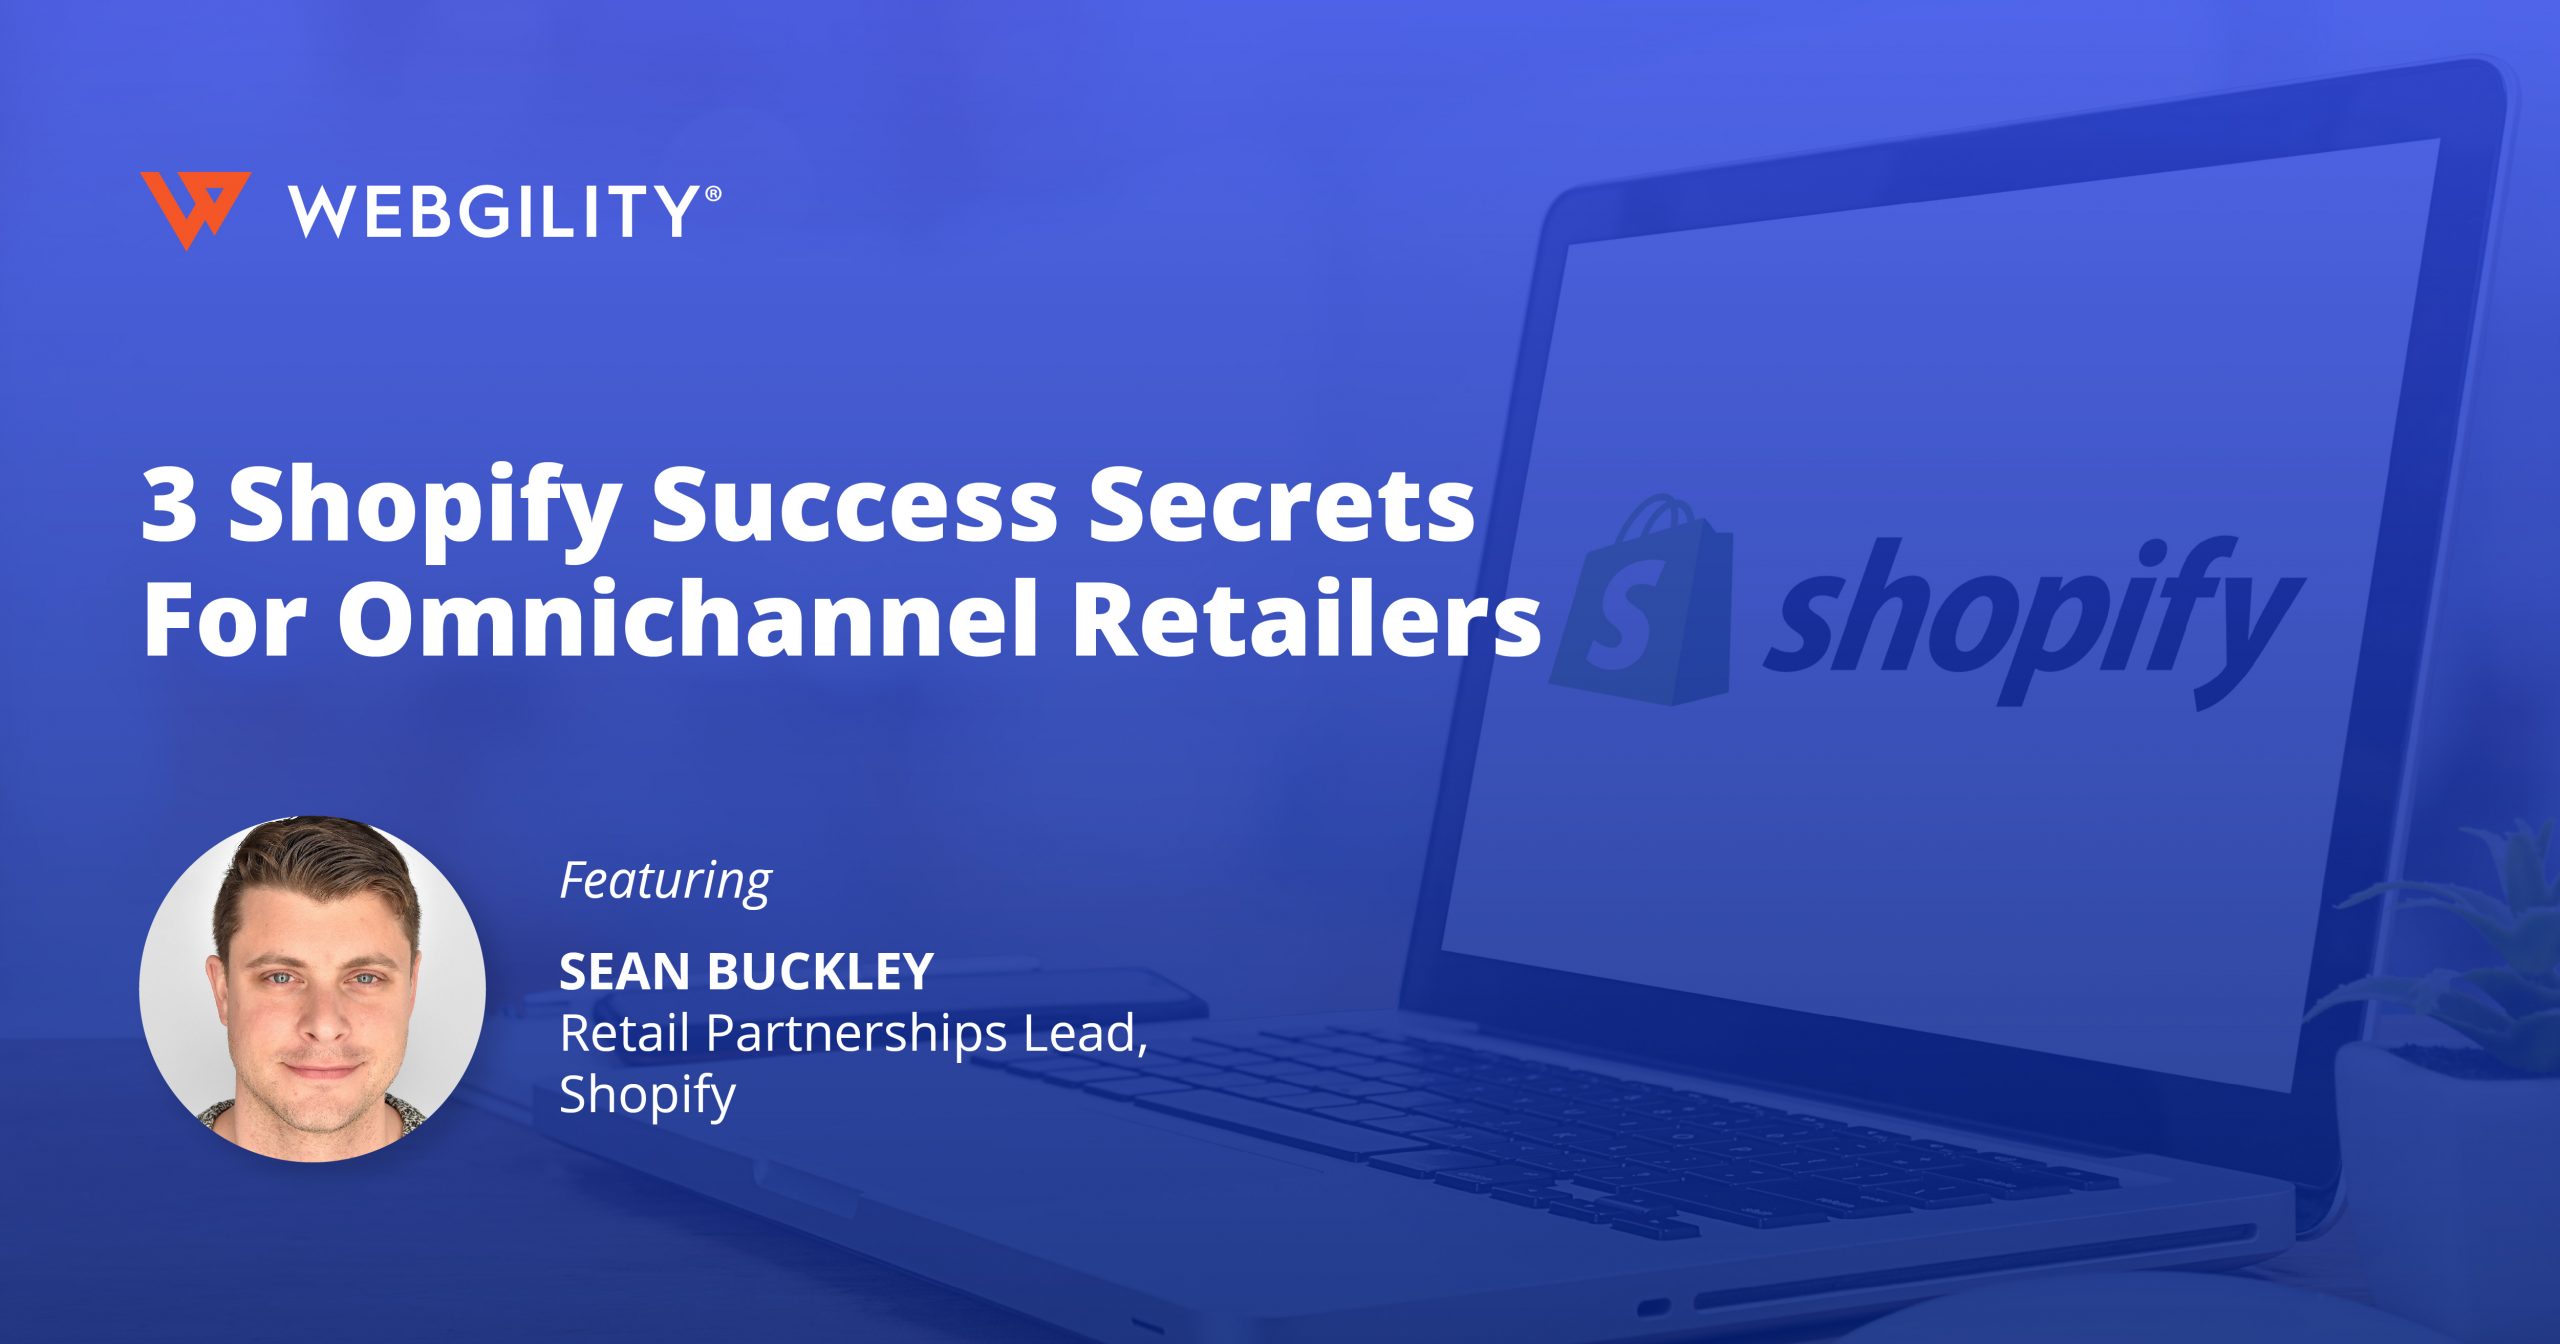 3 Shopify Success Secrets for Omnichannel Retailers